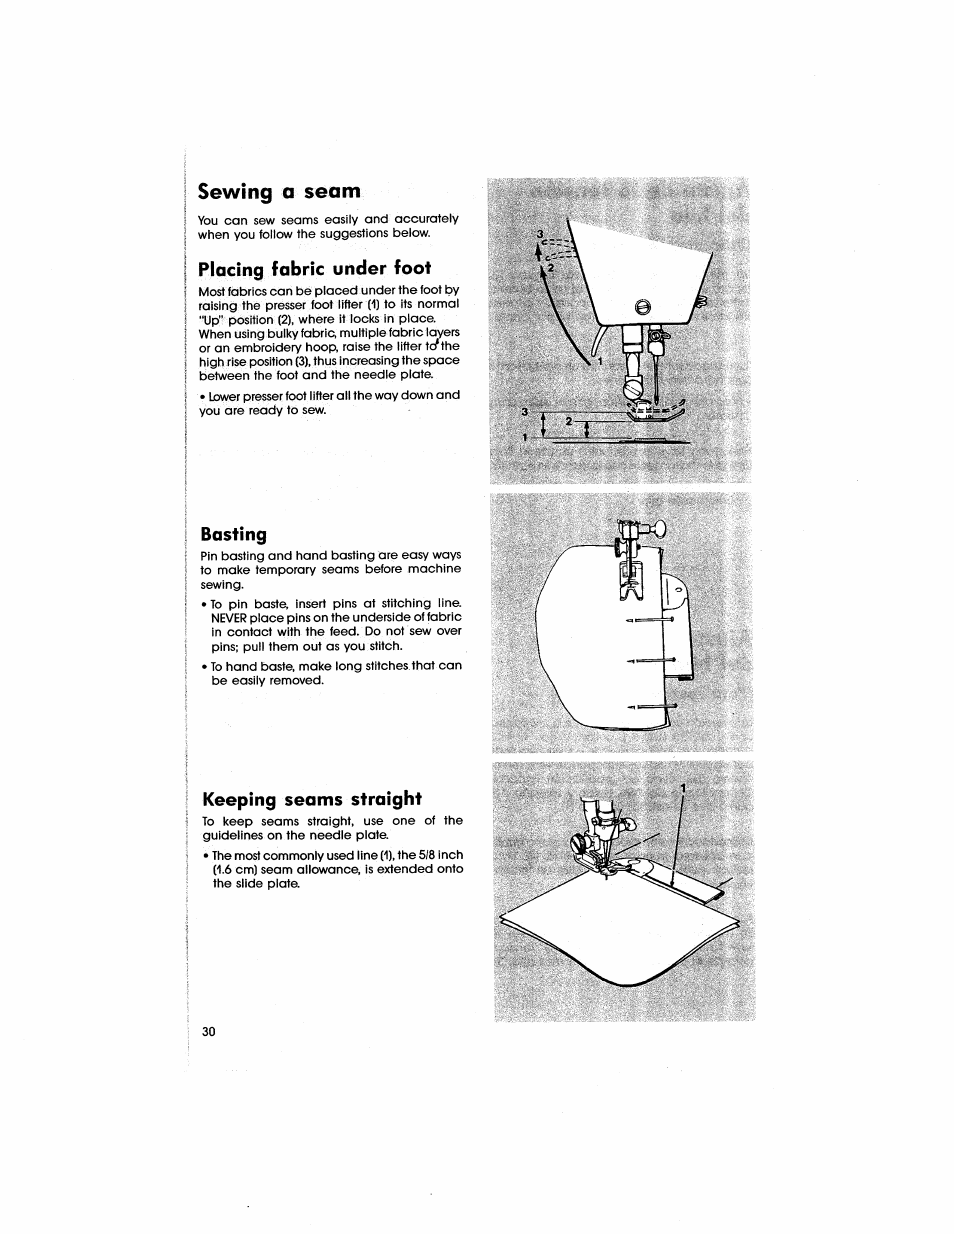 Sewing a seam, I placing fabric under foot, Basting | Keeping seams straight | SINGER 5805 User Manual | Page 32 / 88